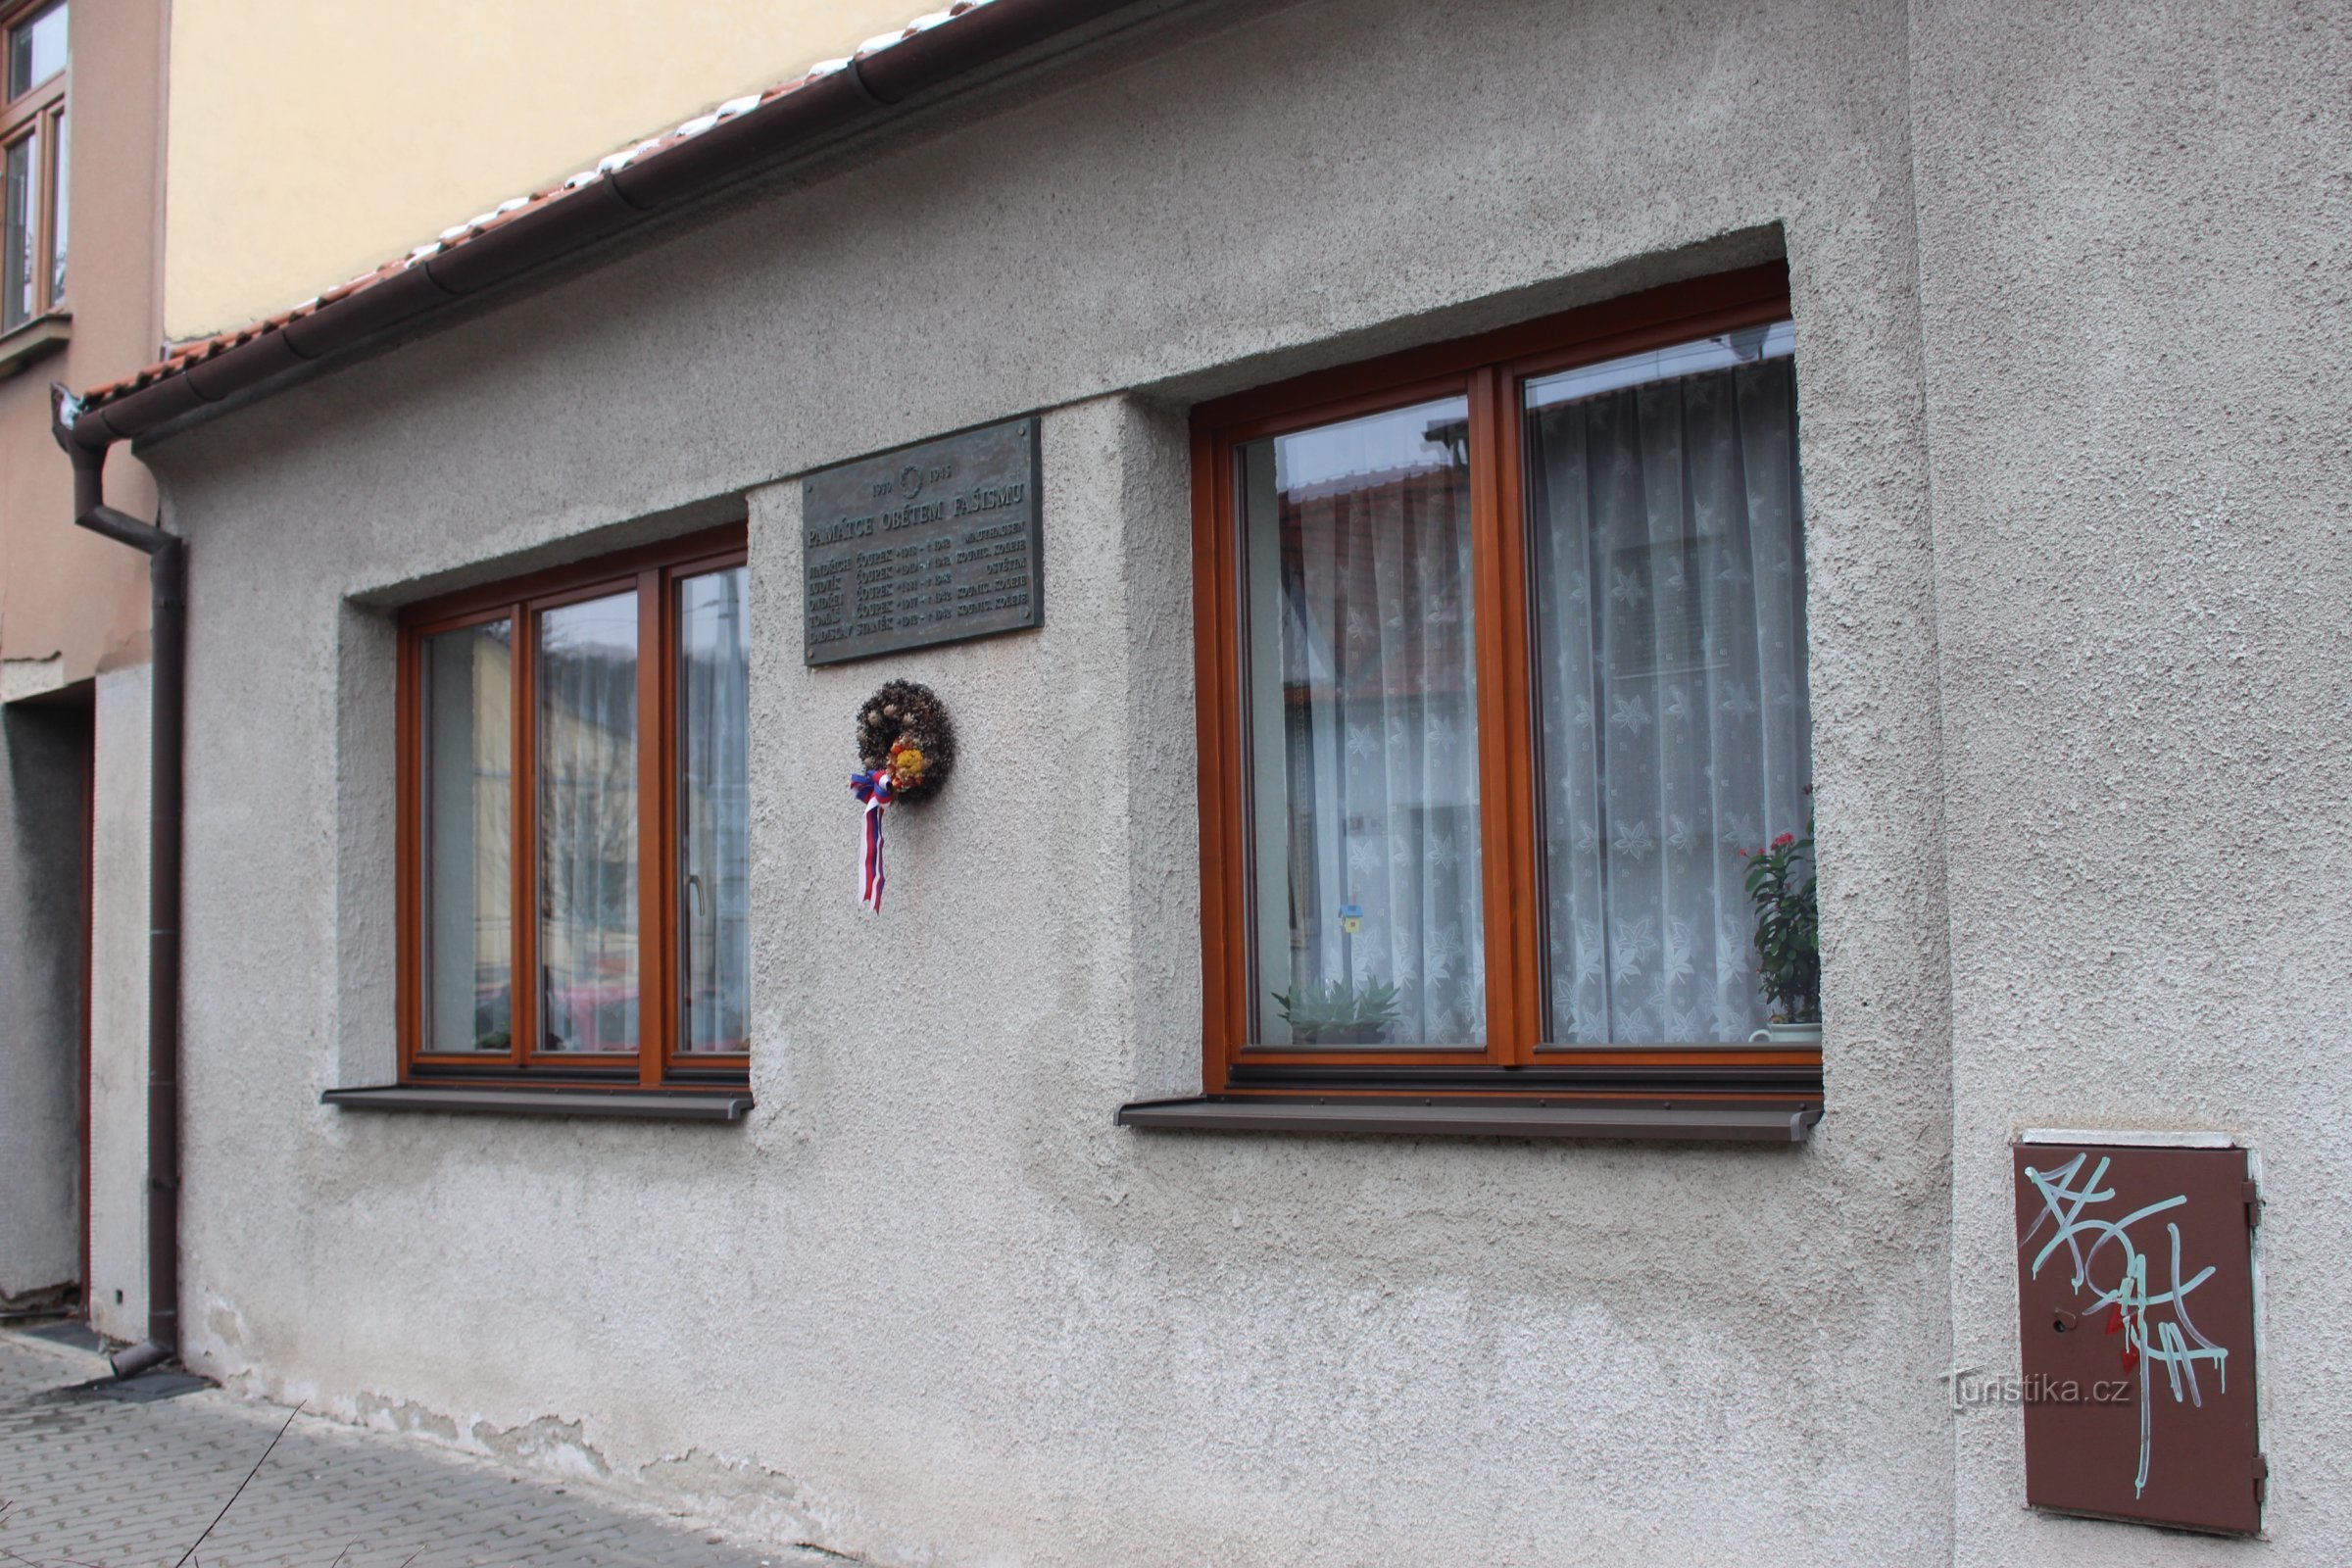 Brno-Komín - commemorative plaque of the Čoupky family